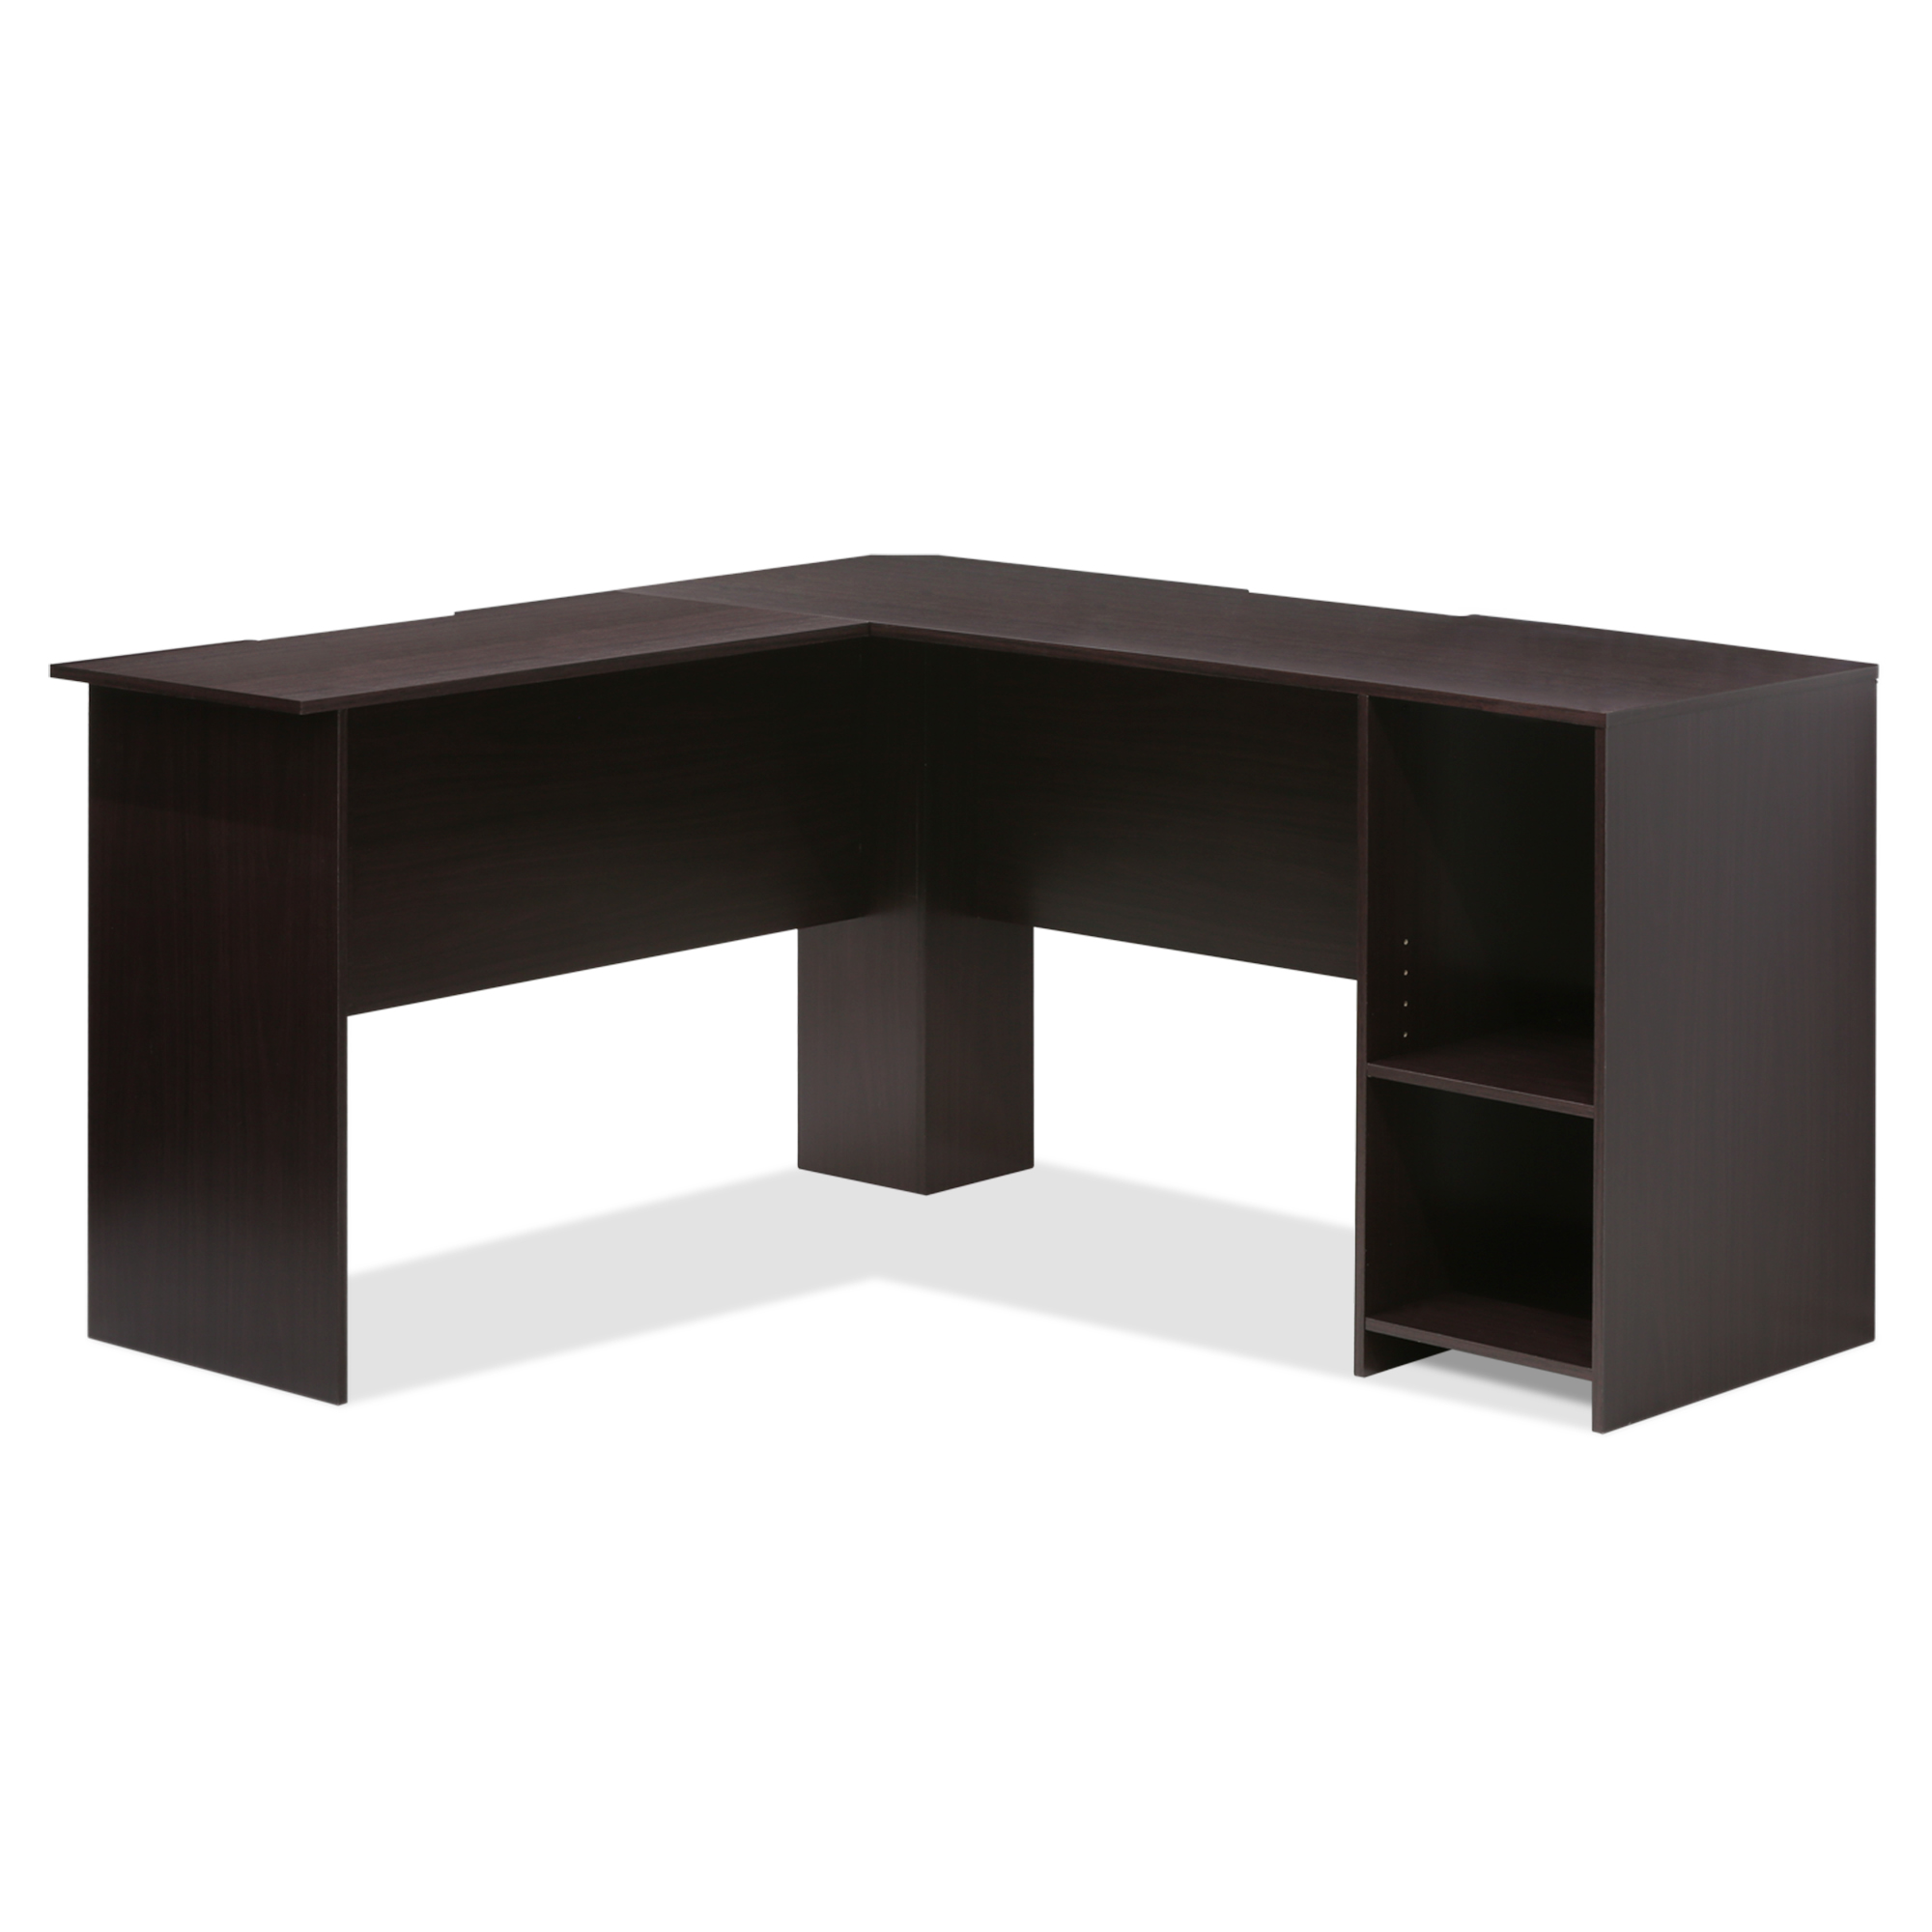 Furinno Indo L-Shaped Desk with Bookshelves, Espresso - image 1 of 8